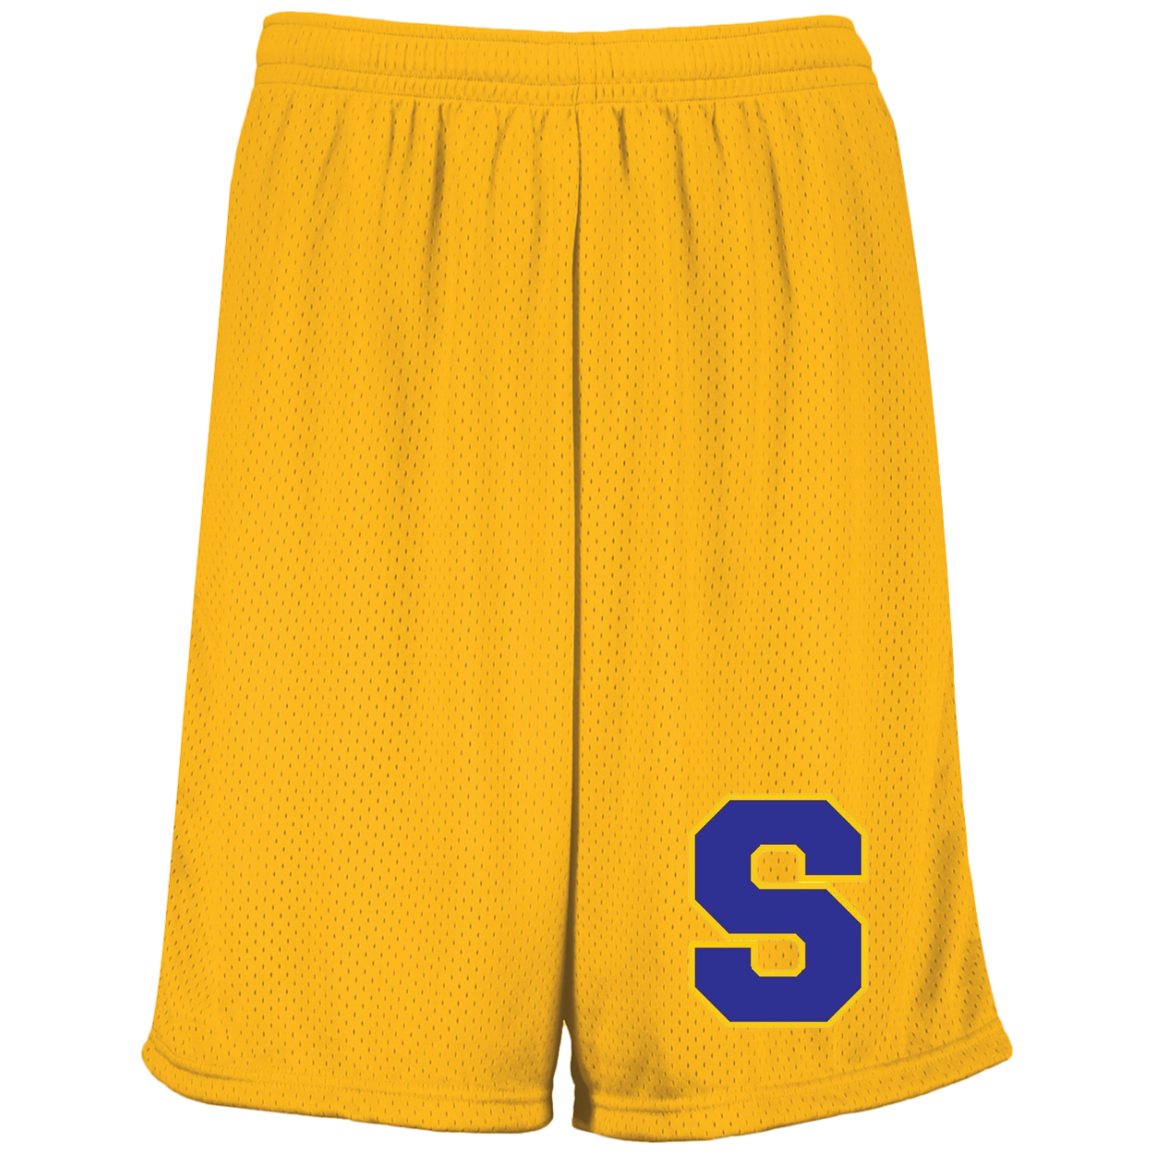 Springfield S Moisture-Wicking 9 inch Inseam Mesh Shorts